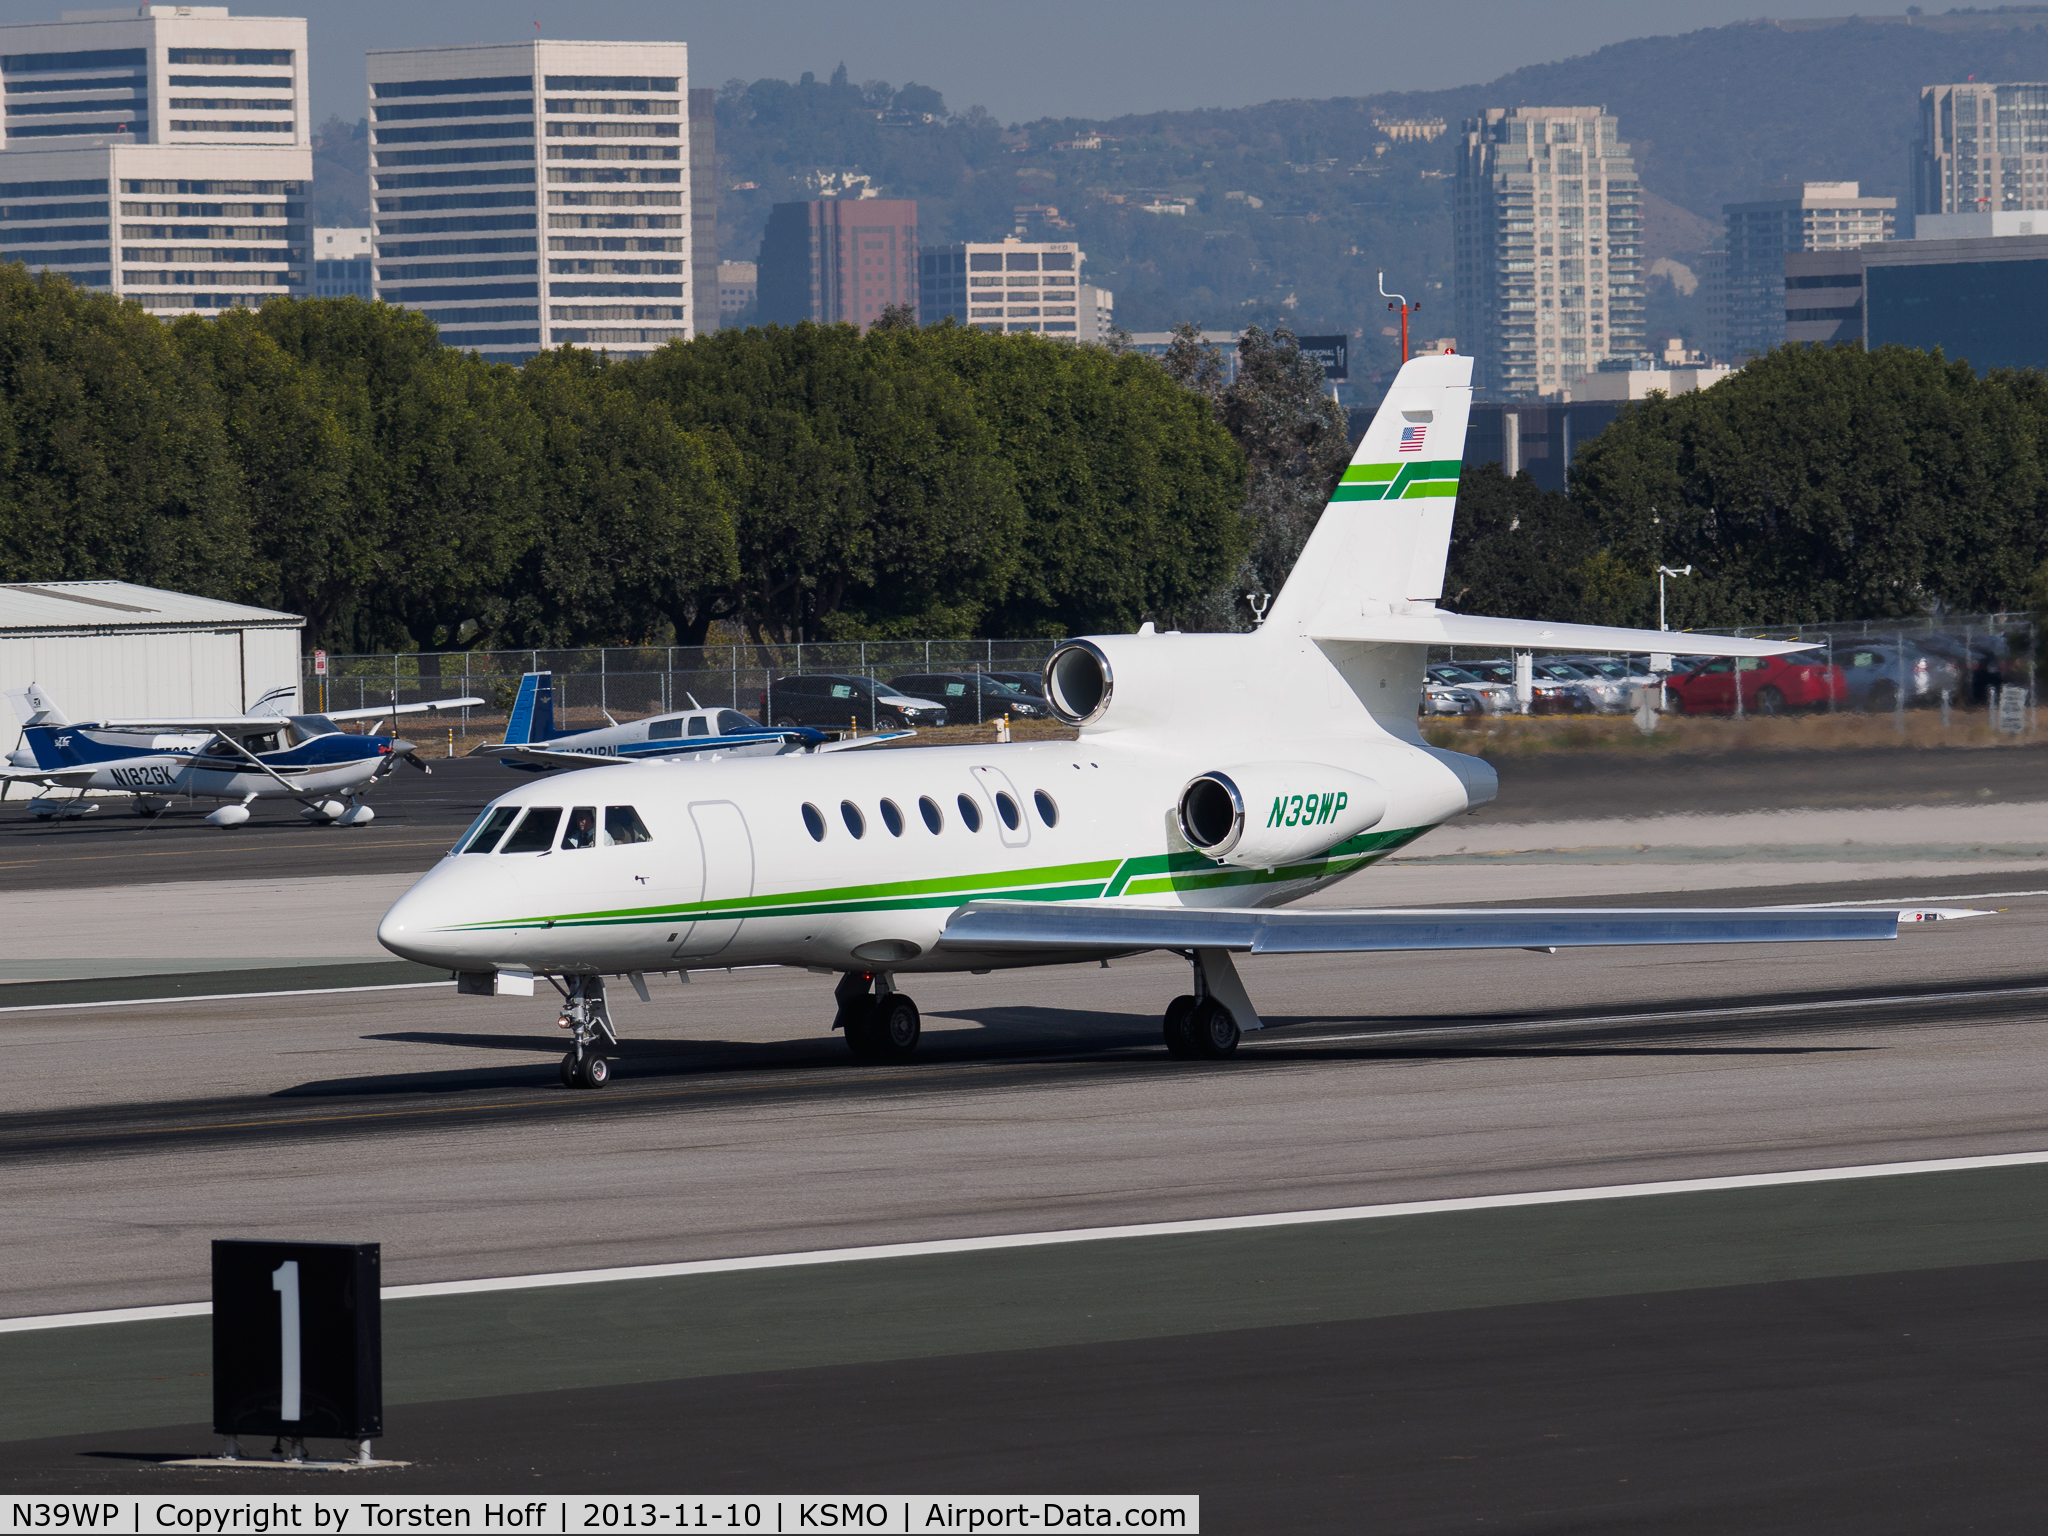 N39WP, 2000 Dassault Falcon 50EX C/N 294, N39WP departing from RWY 21